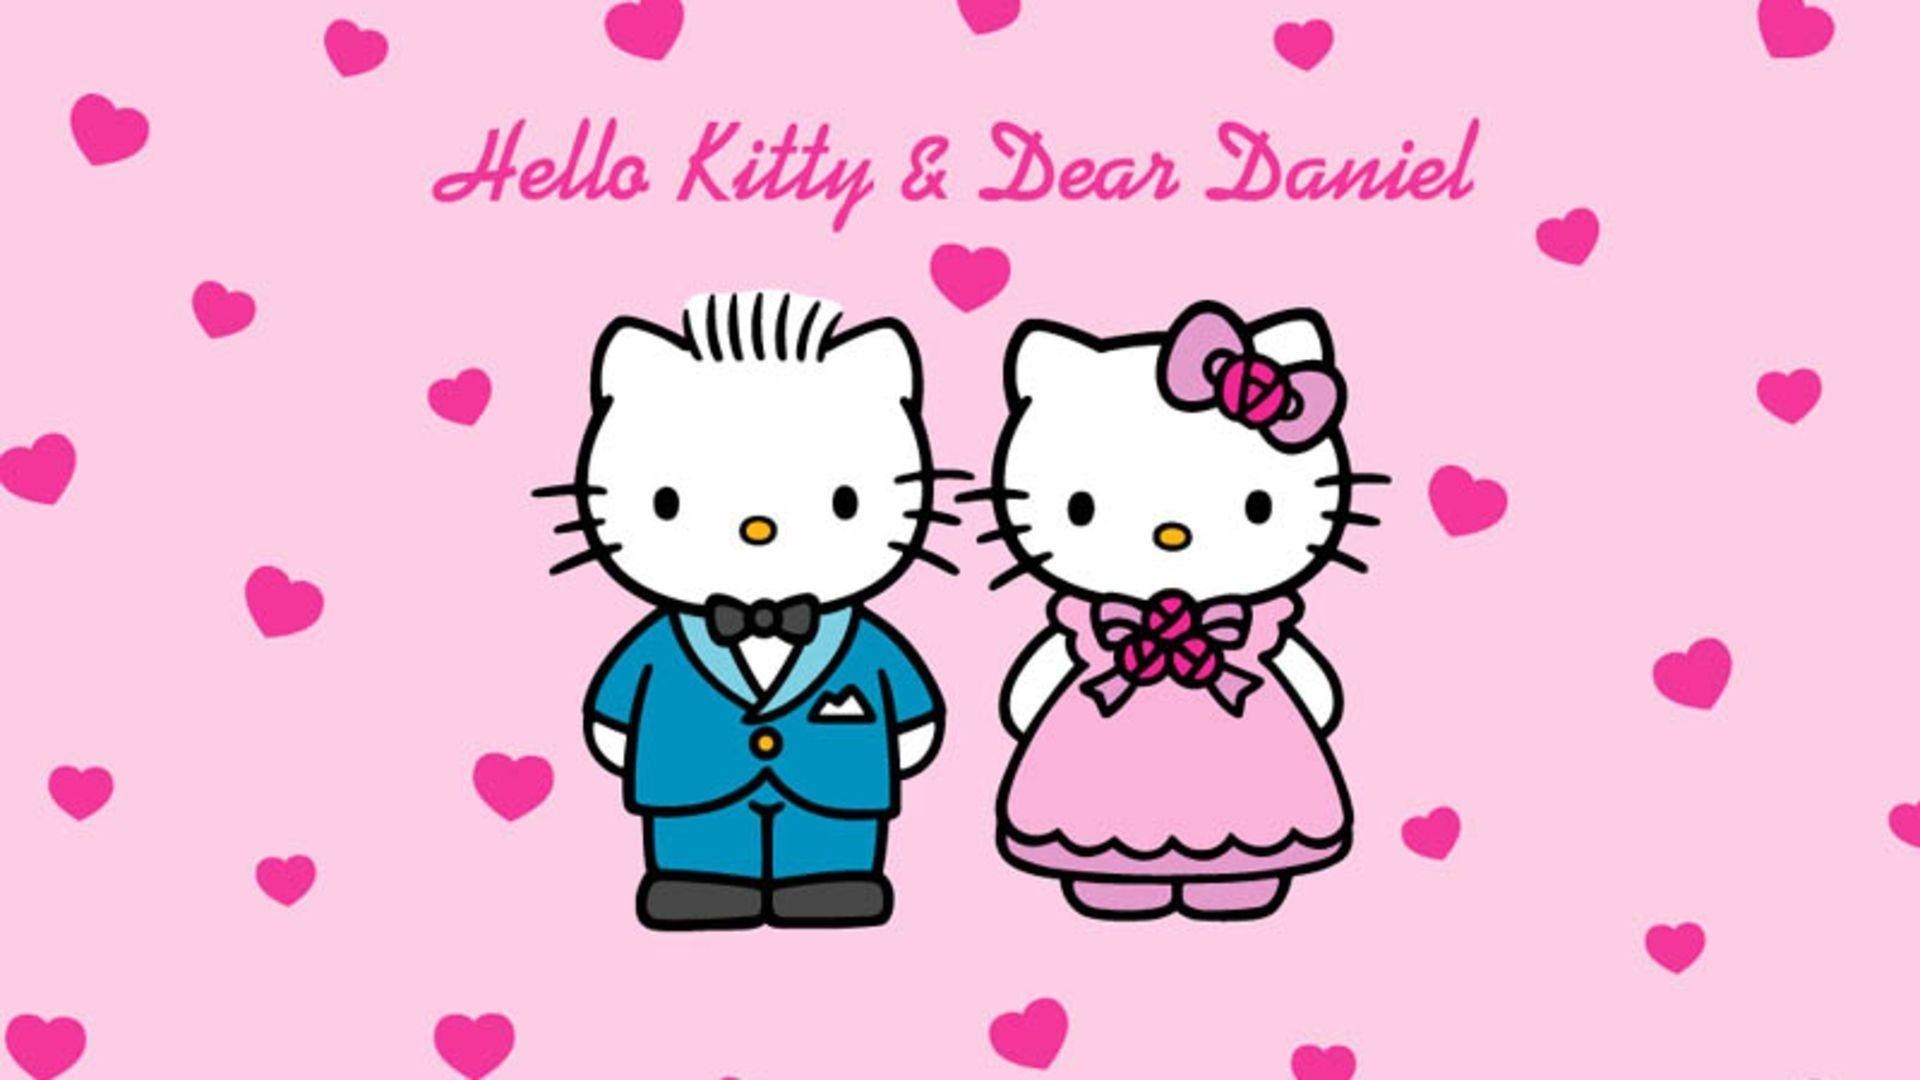 Hello Kitty: The character has a boyfriend named Dear Daniel. 1920x1080 Full HD Background.